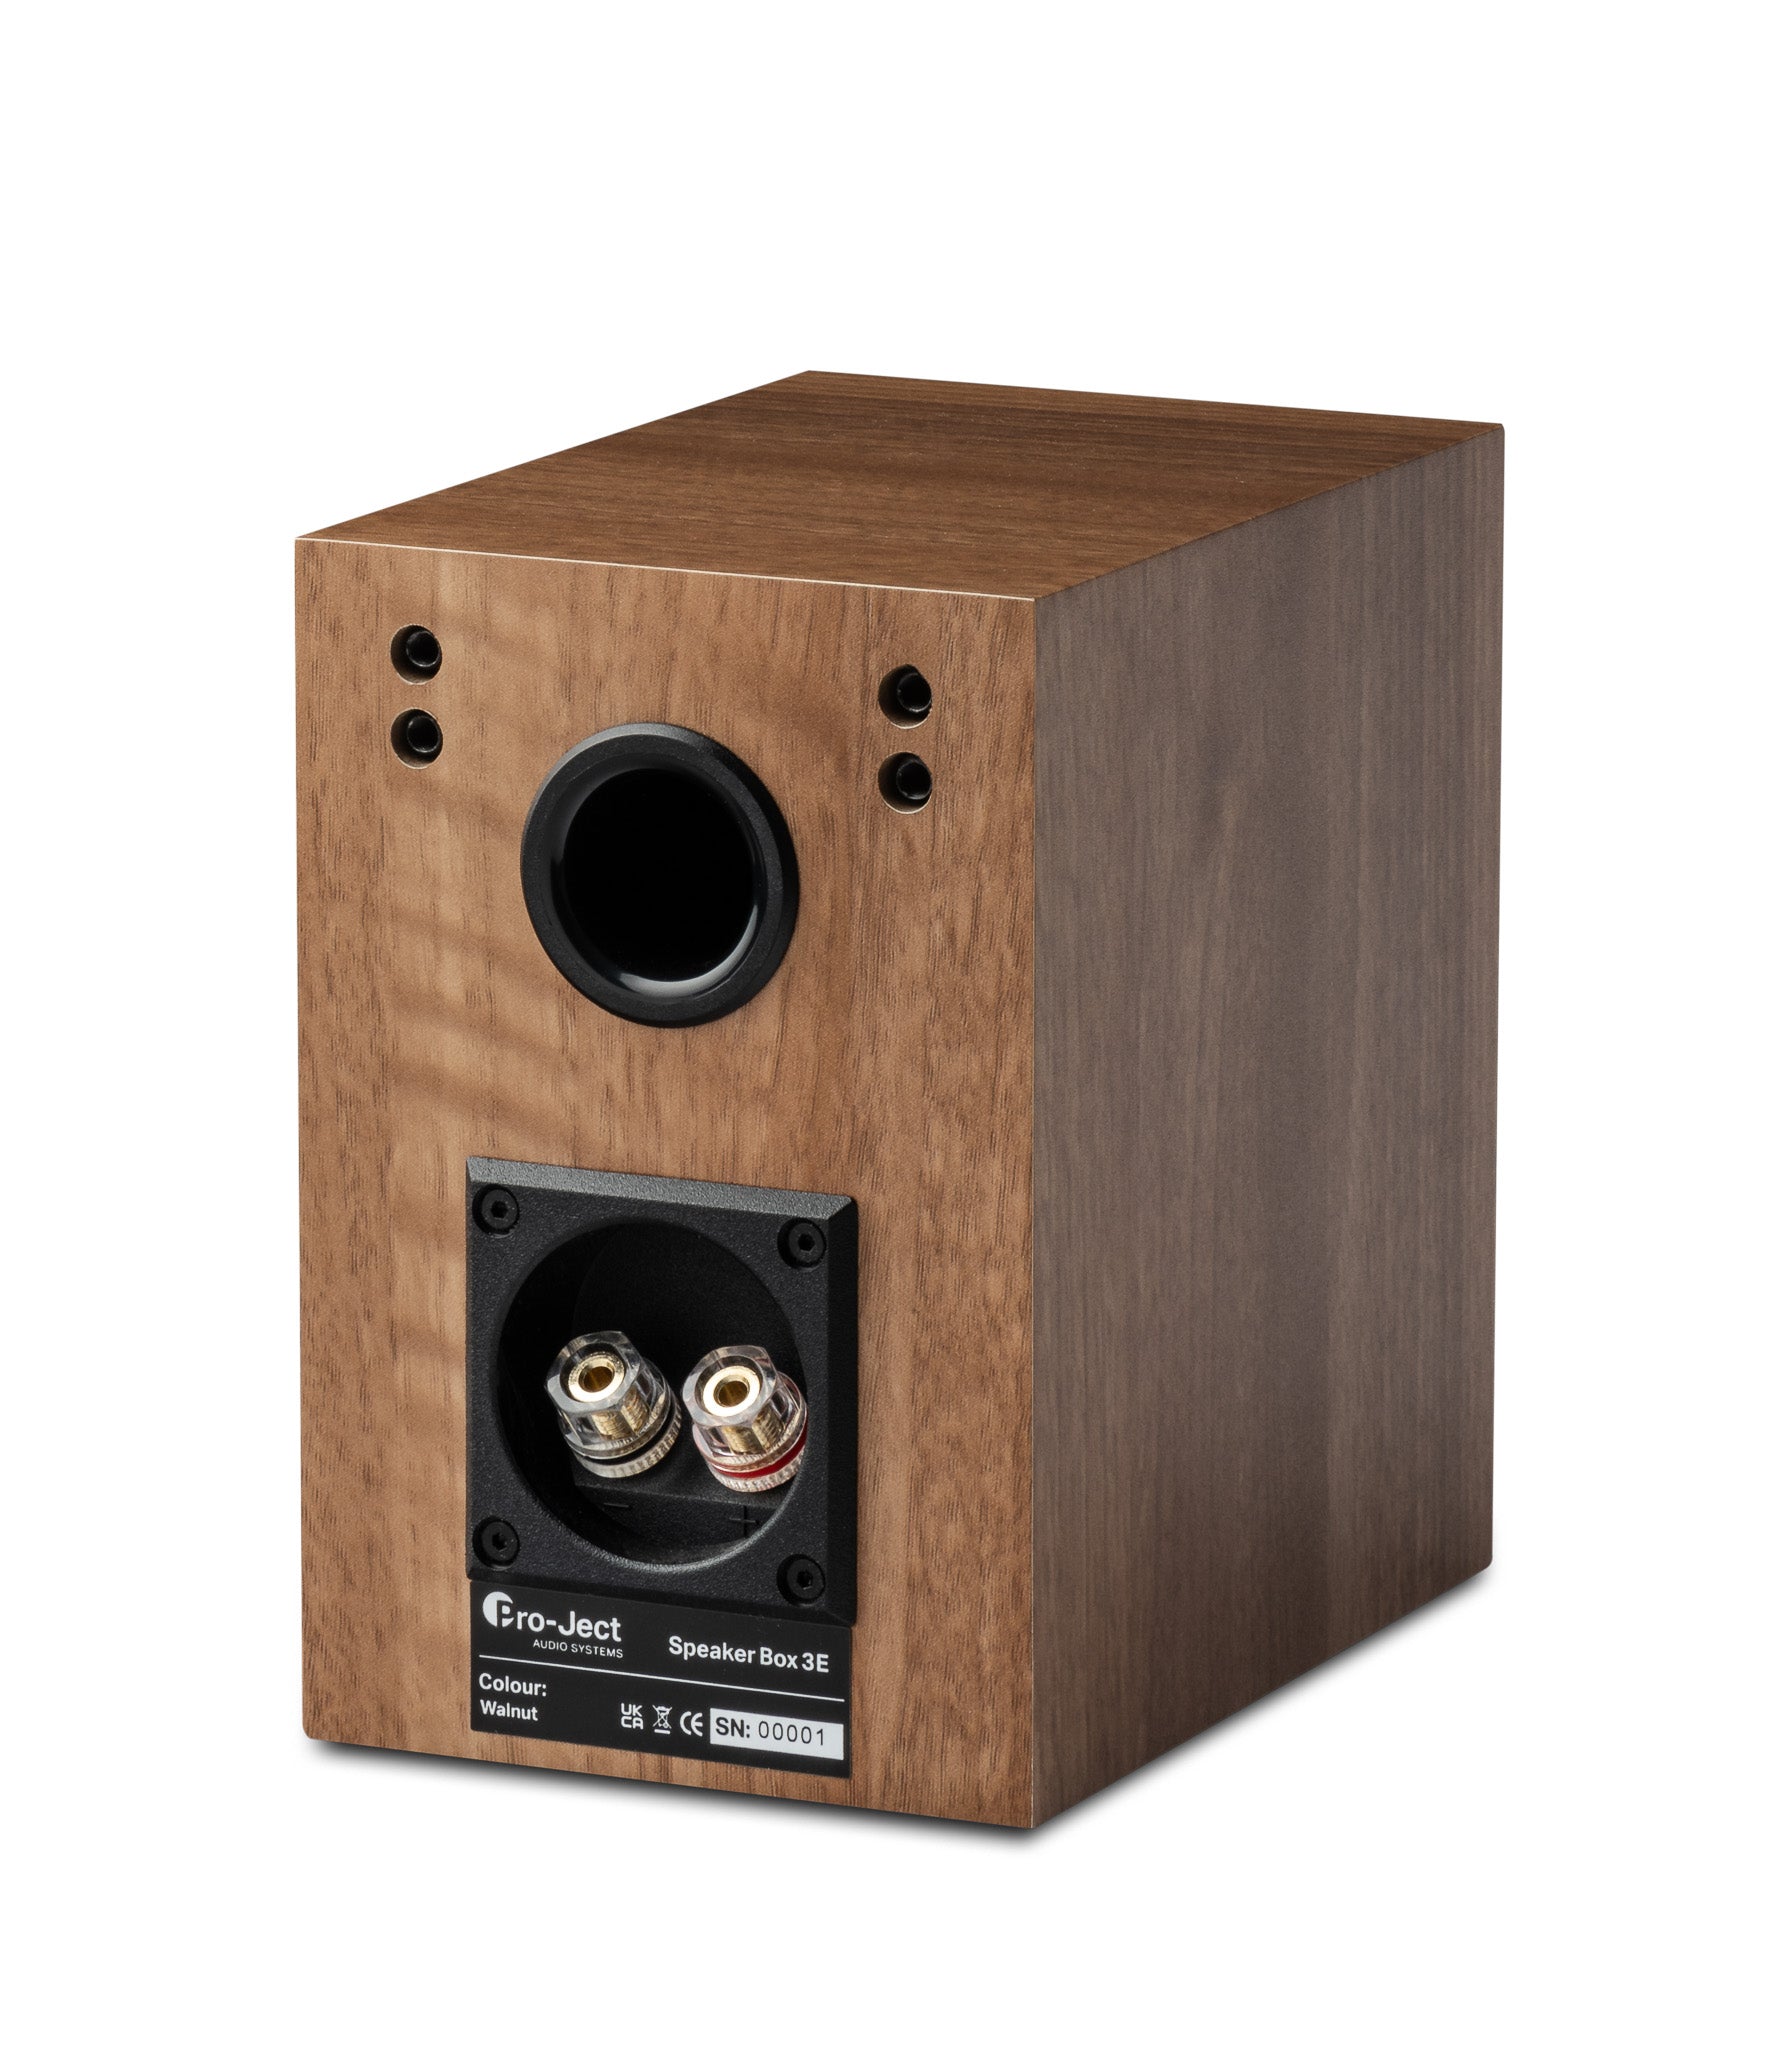 Pro-Ject Speaker Box 3E pair of speakers